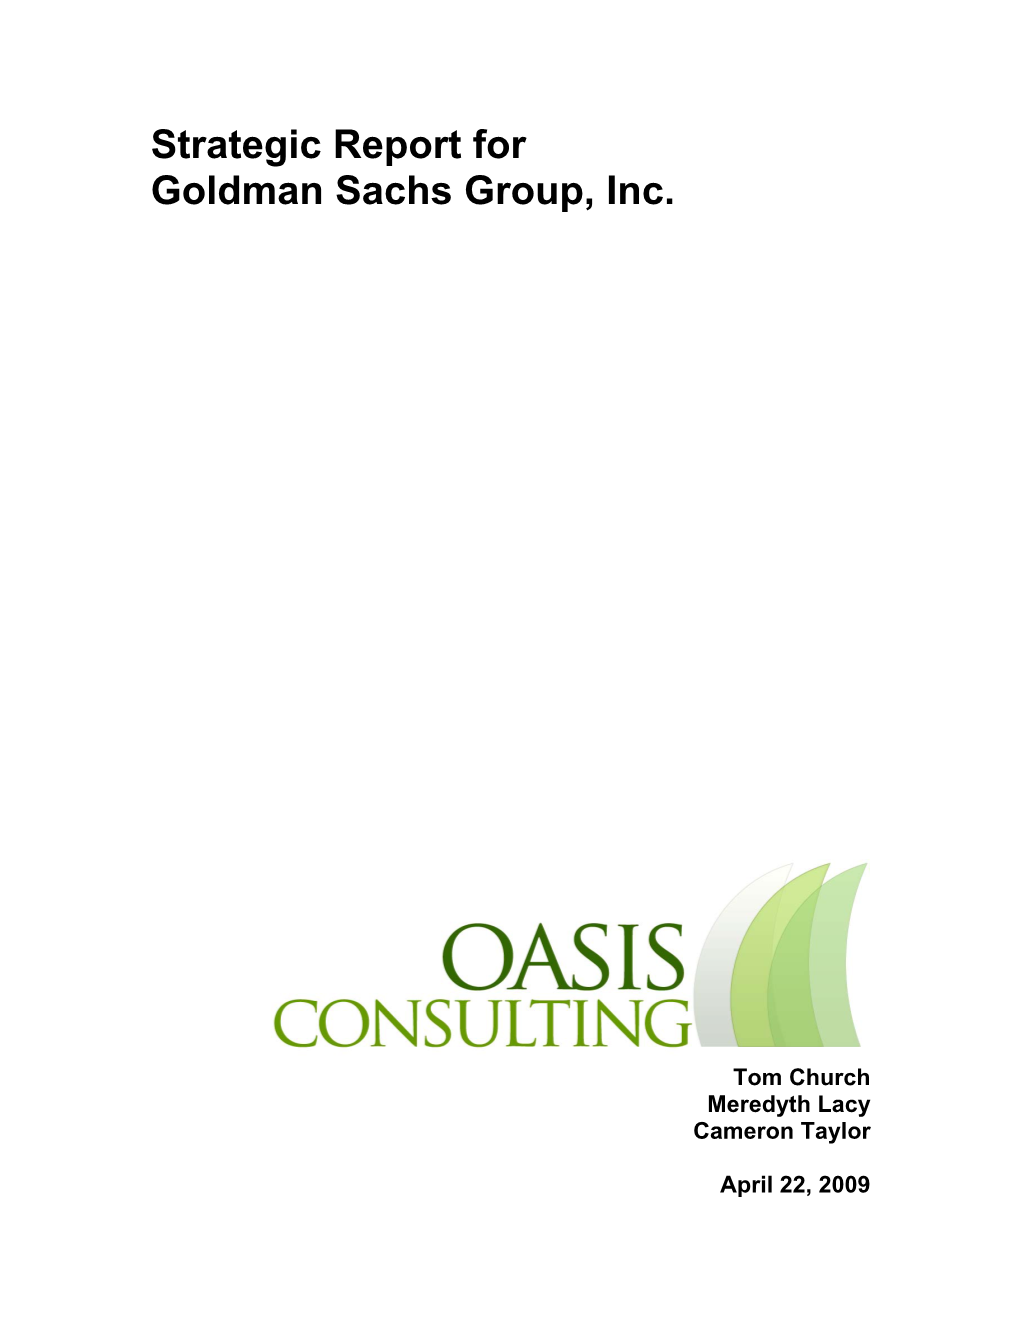 Strategic Report for Goldman Sachs Group, Inc